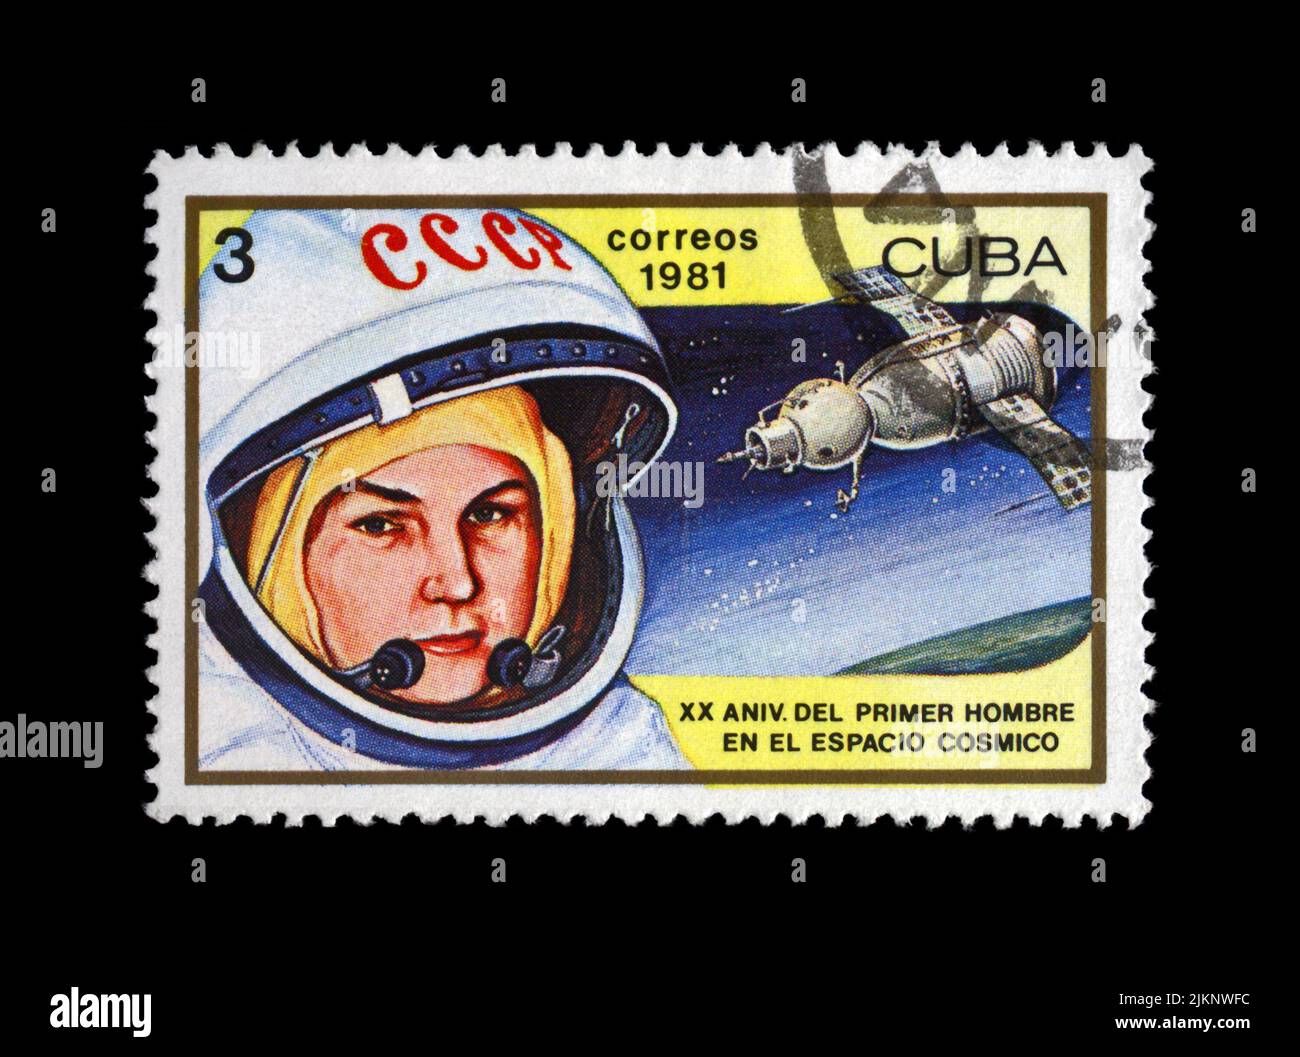 Valentina Tereshkova, astronaut , first woman in space, rocket shuttle Vostok 6, circa 1981. vintage postal stamp isolated on black background. Stock Photo